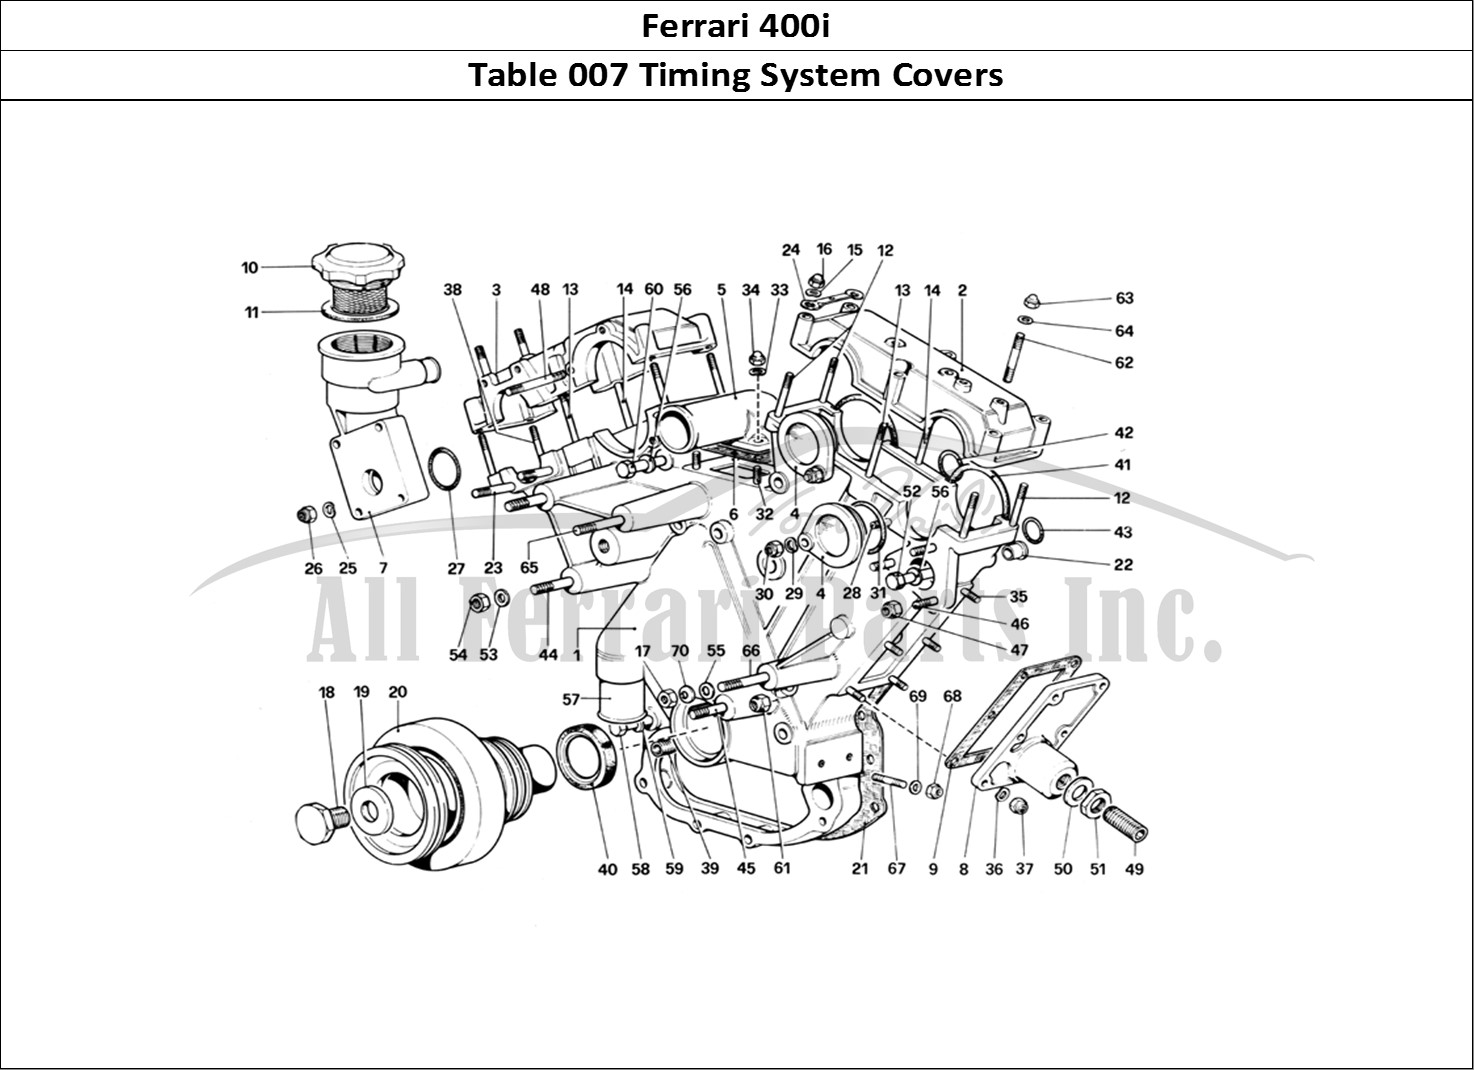 Ferrari Parts Ferrari 400i (1983 Mechanical) Page 007 Timing System - Housing a